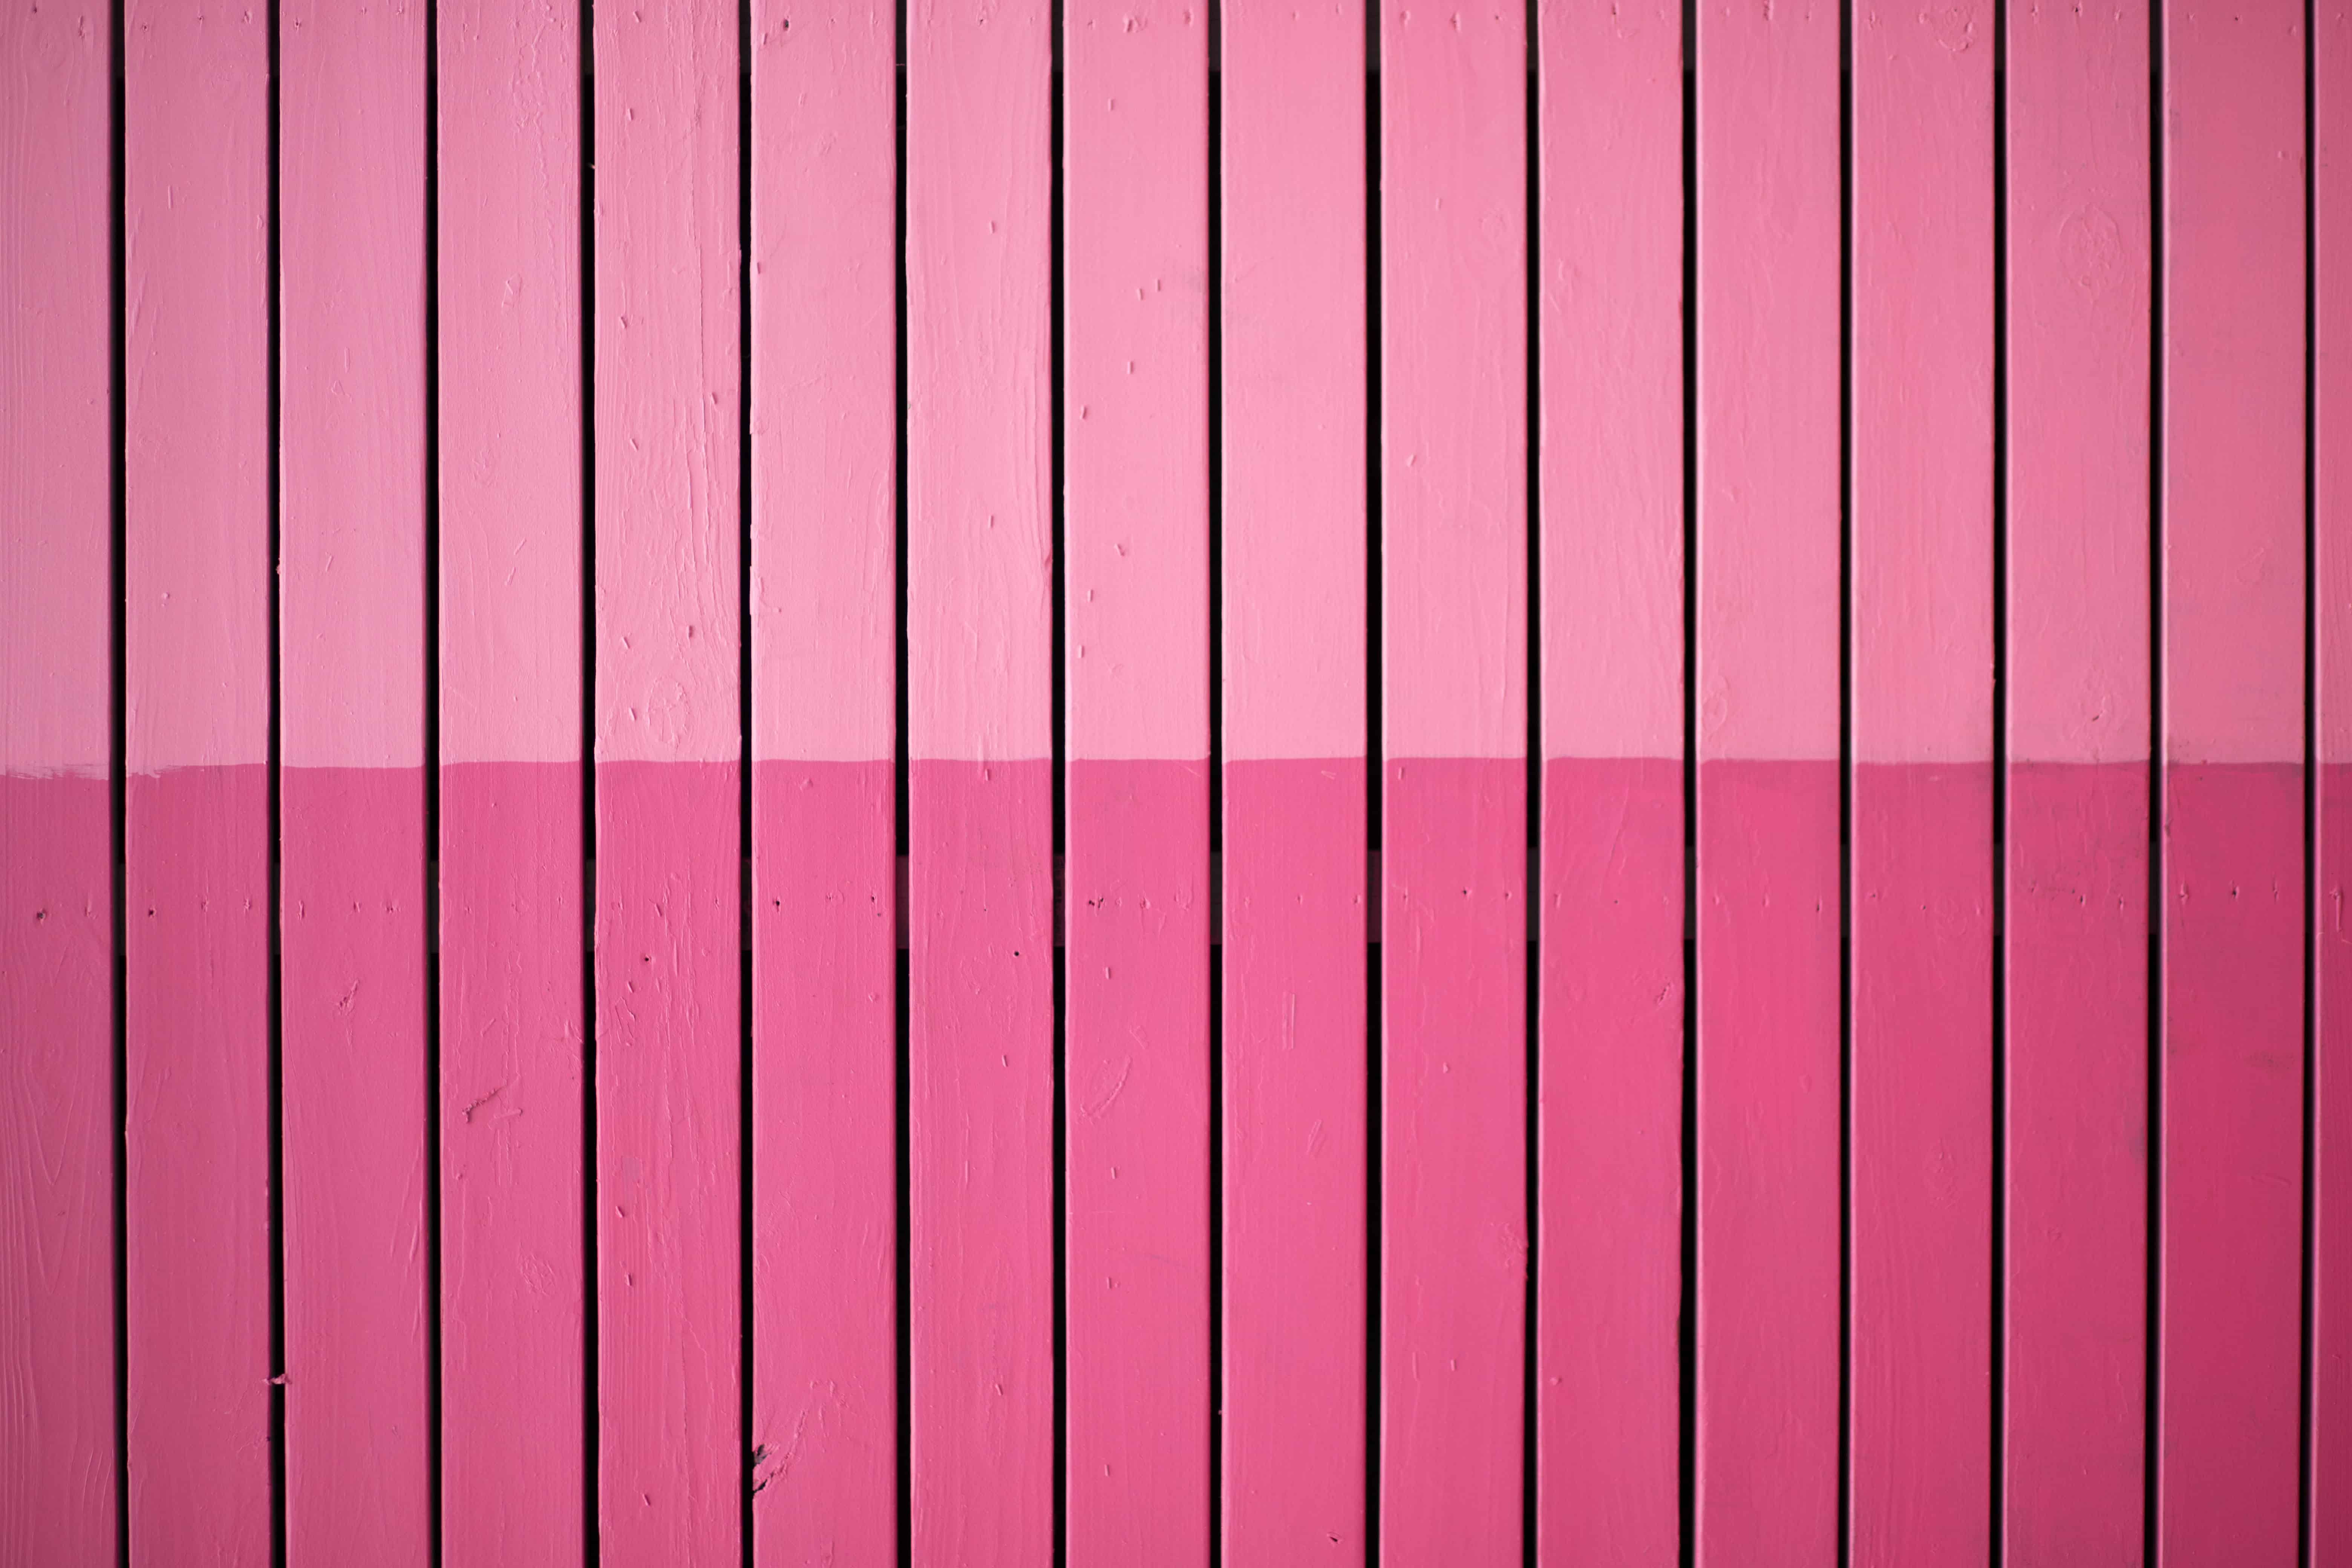 Light and dark pink panels